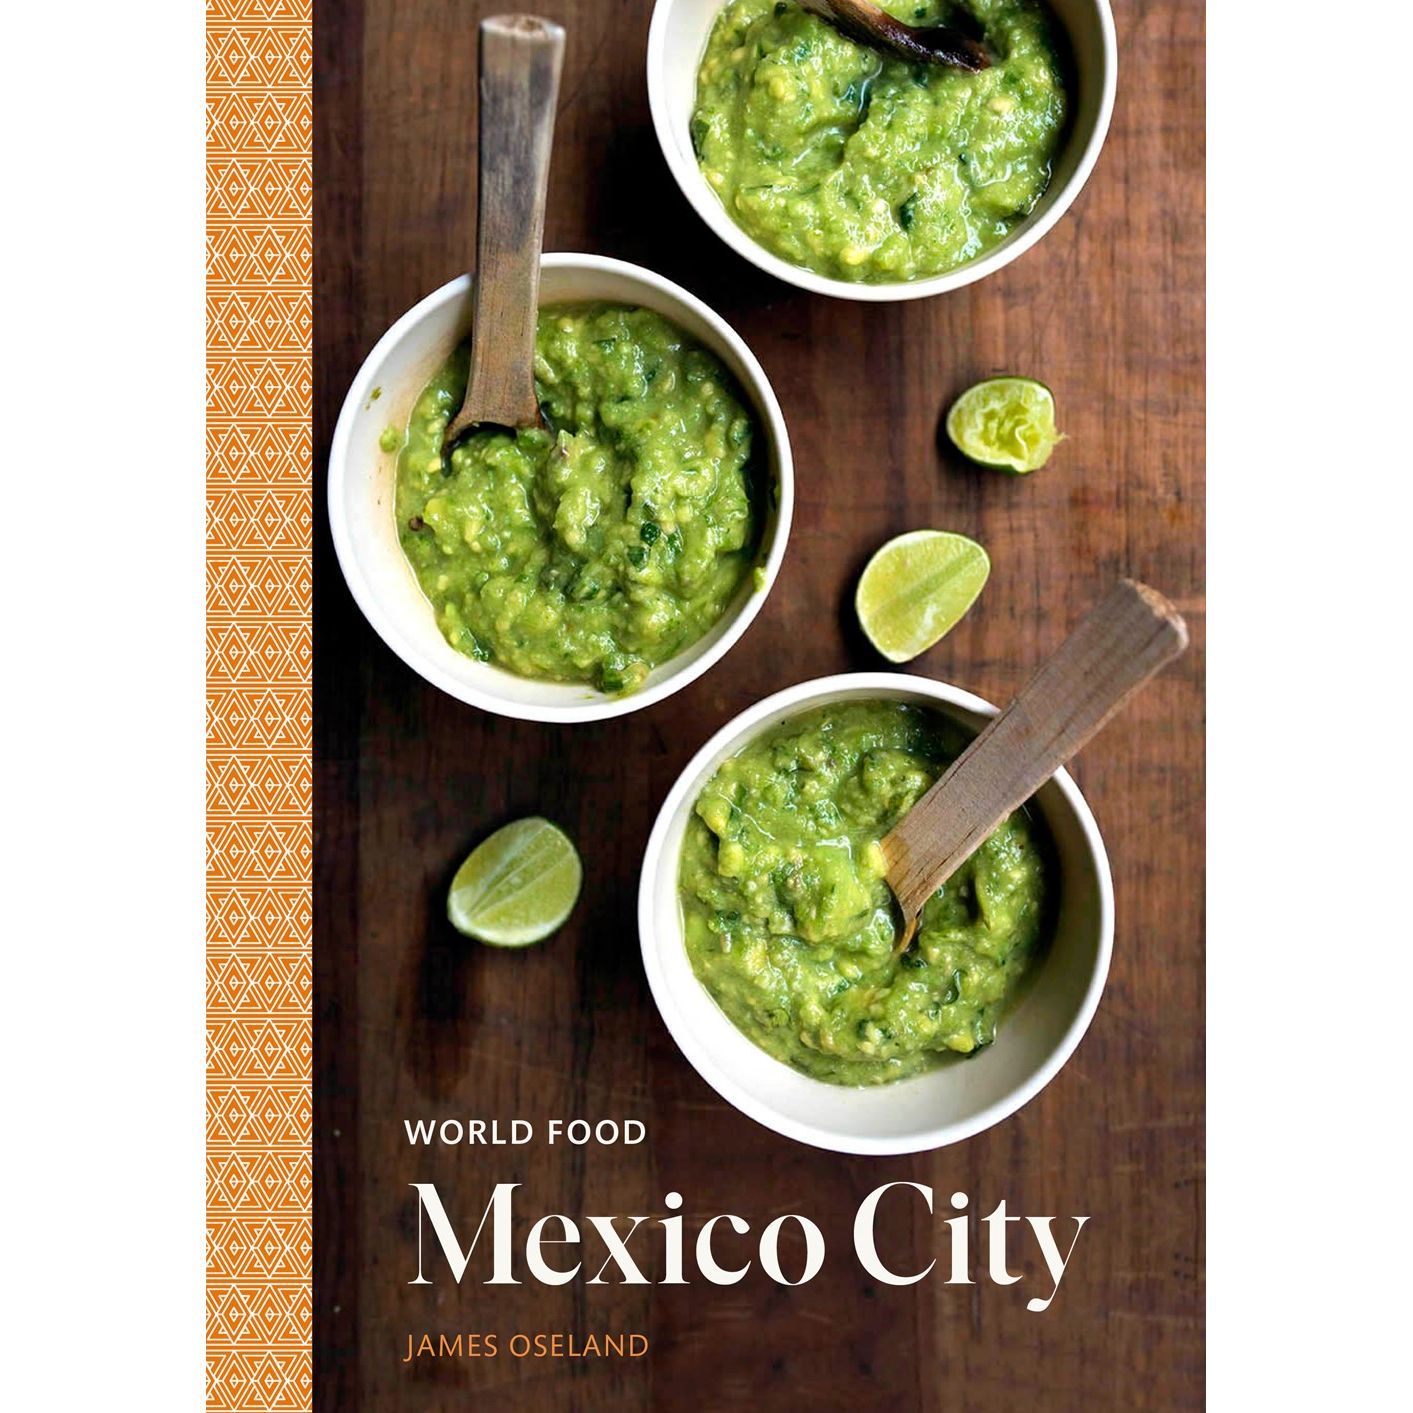 World Food Mexico City (James Oseland)